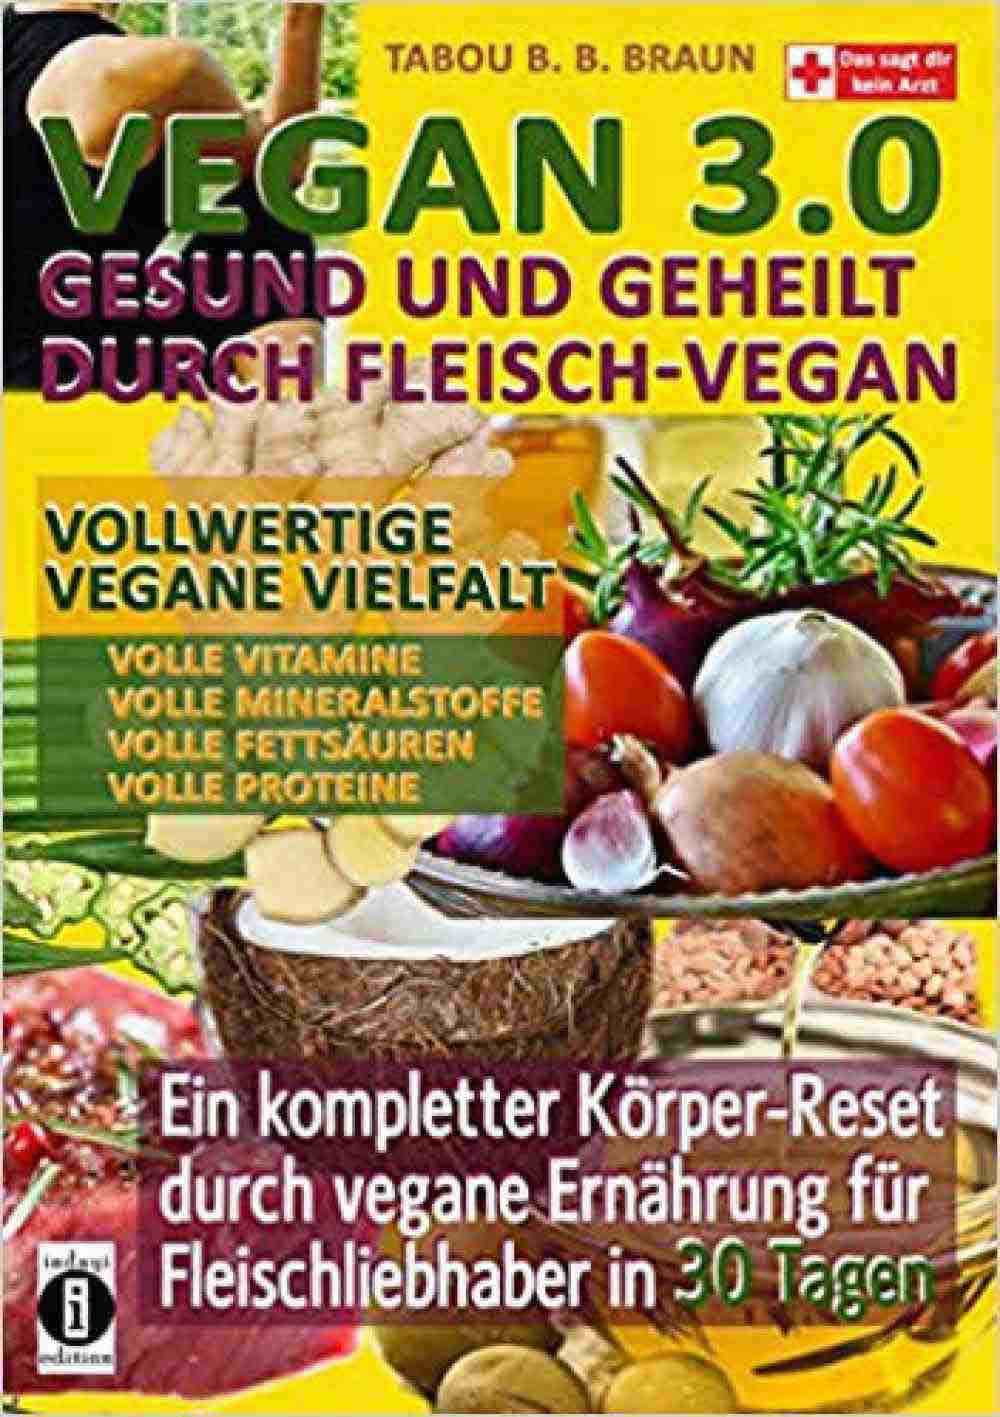 Anzeige: Lesetipps: Tabou B. B. Braun, »Vegan 3.0«, Veganuary, sei auch du mit dabei!